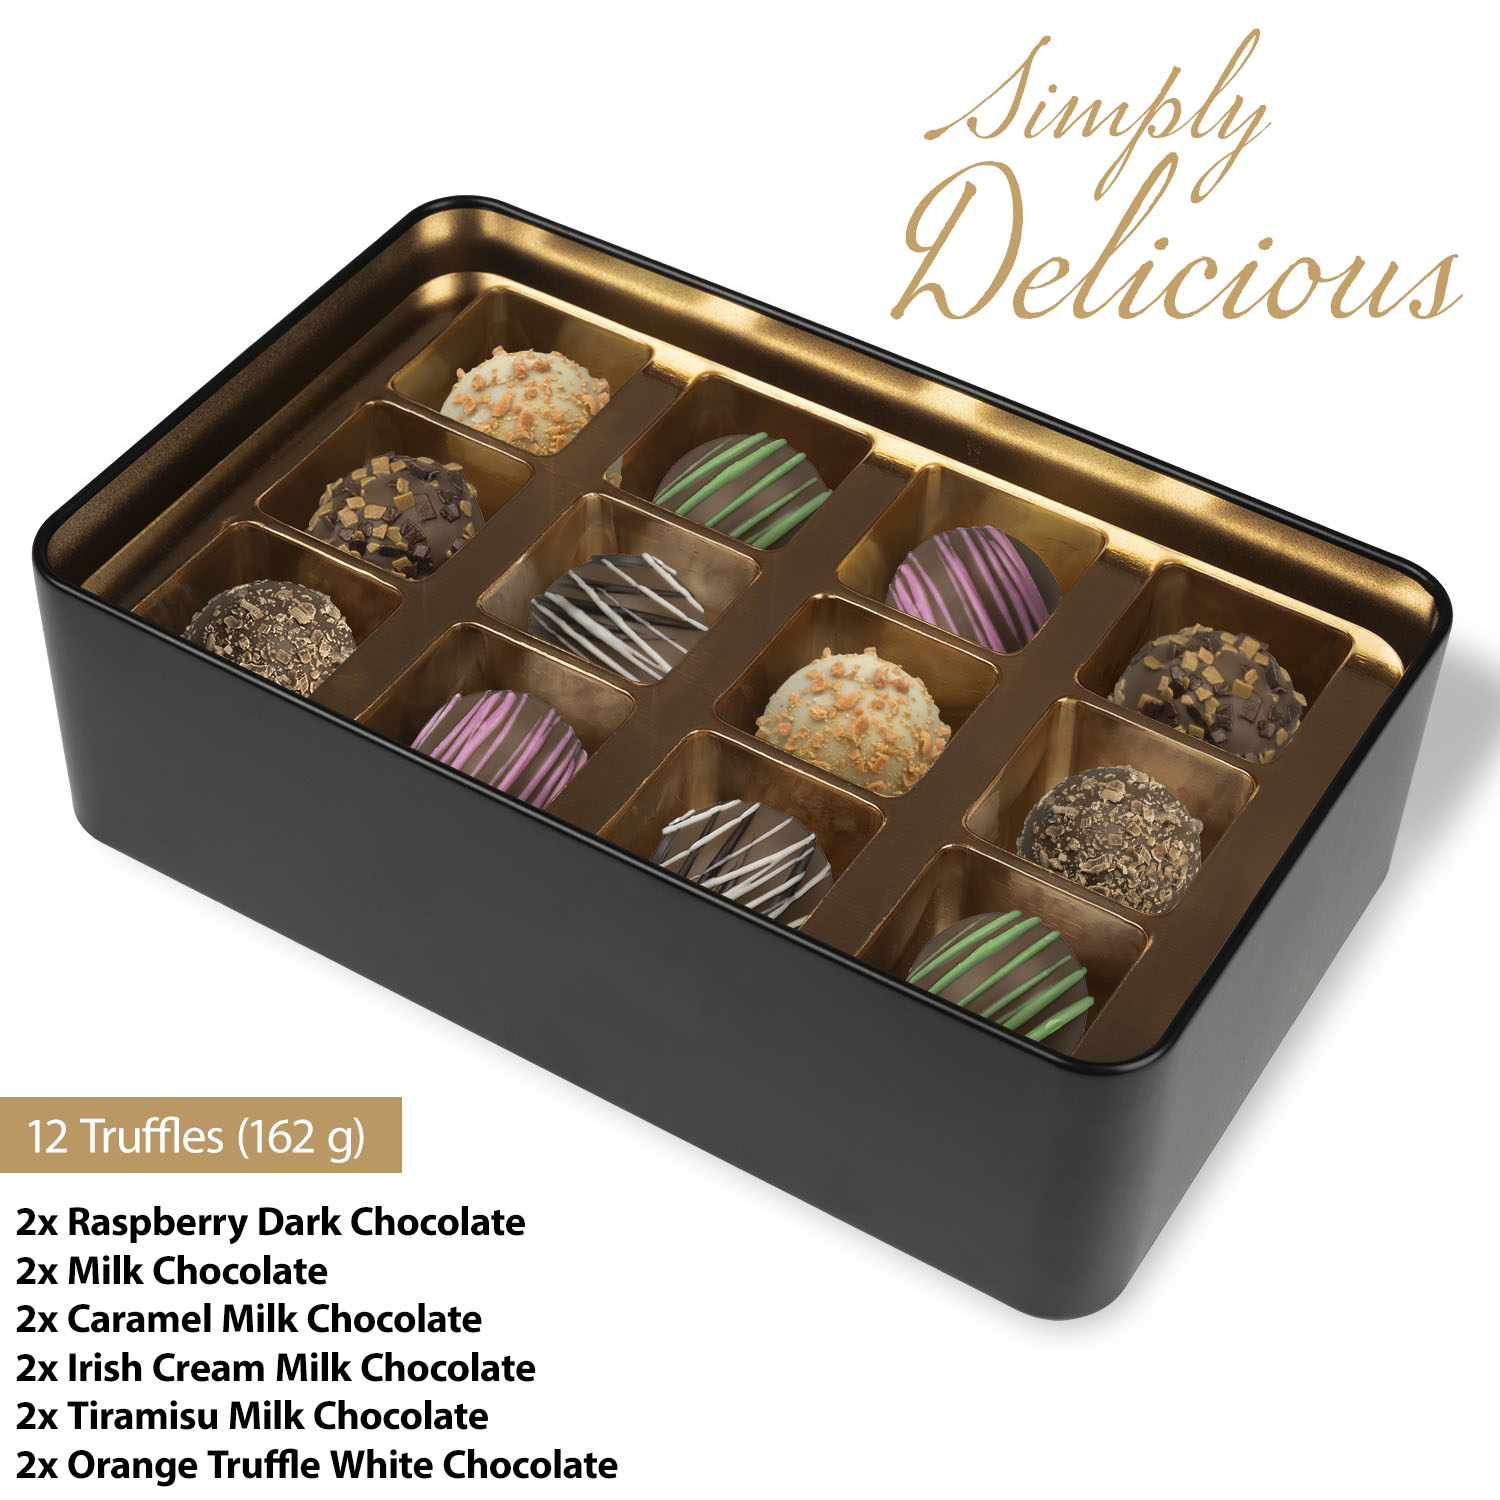 Personalized Chocolates - Merry Christmas  - Truffle Tin With Photo Upload 